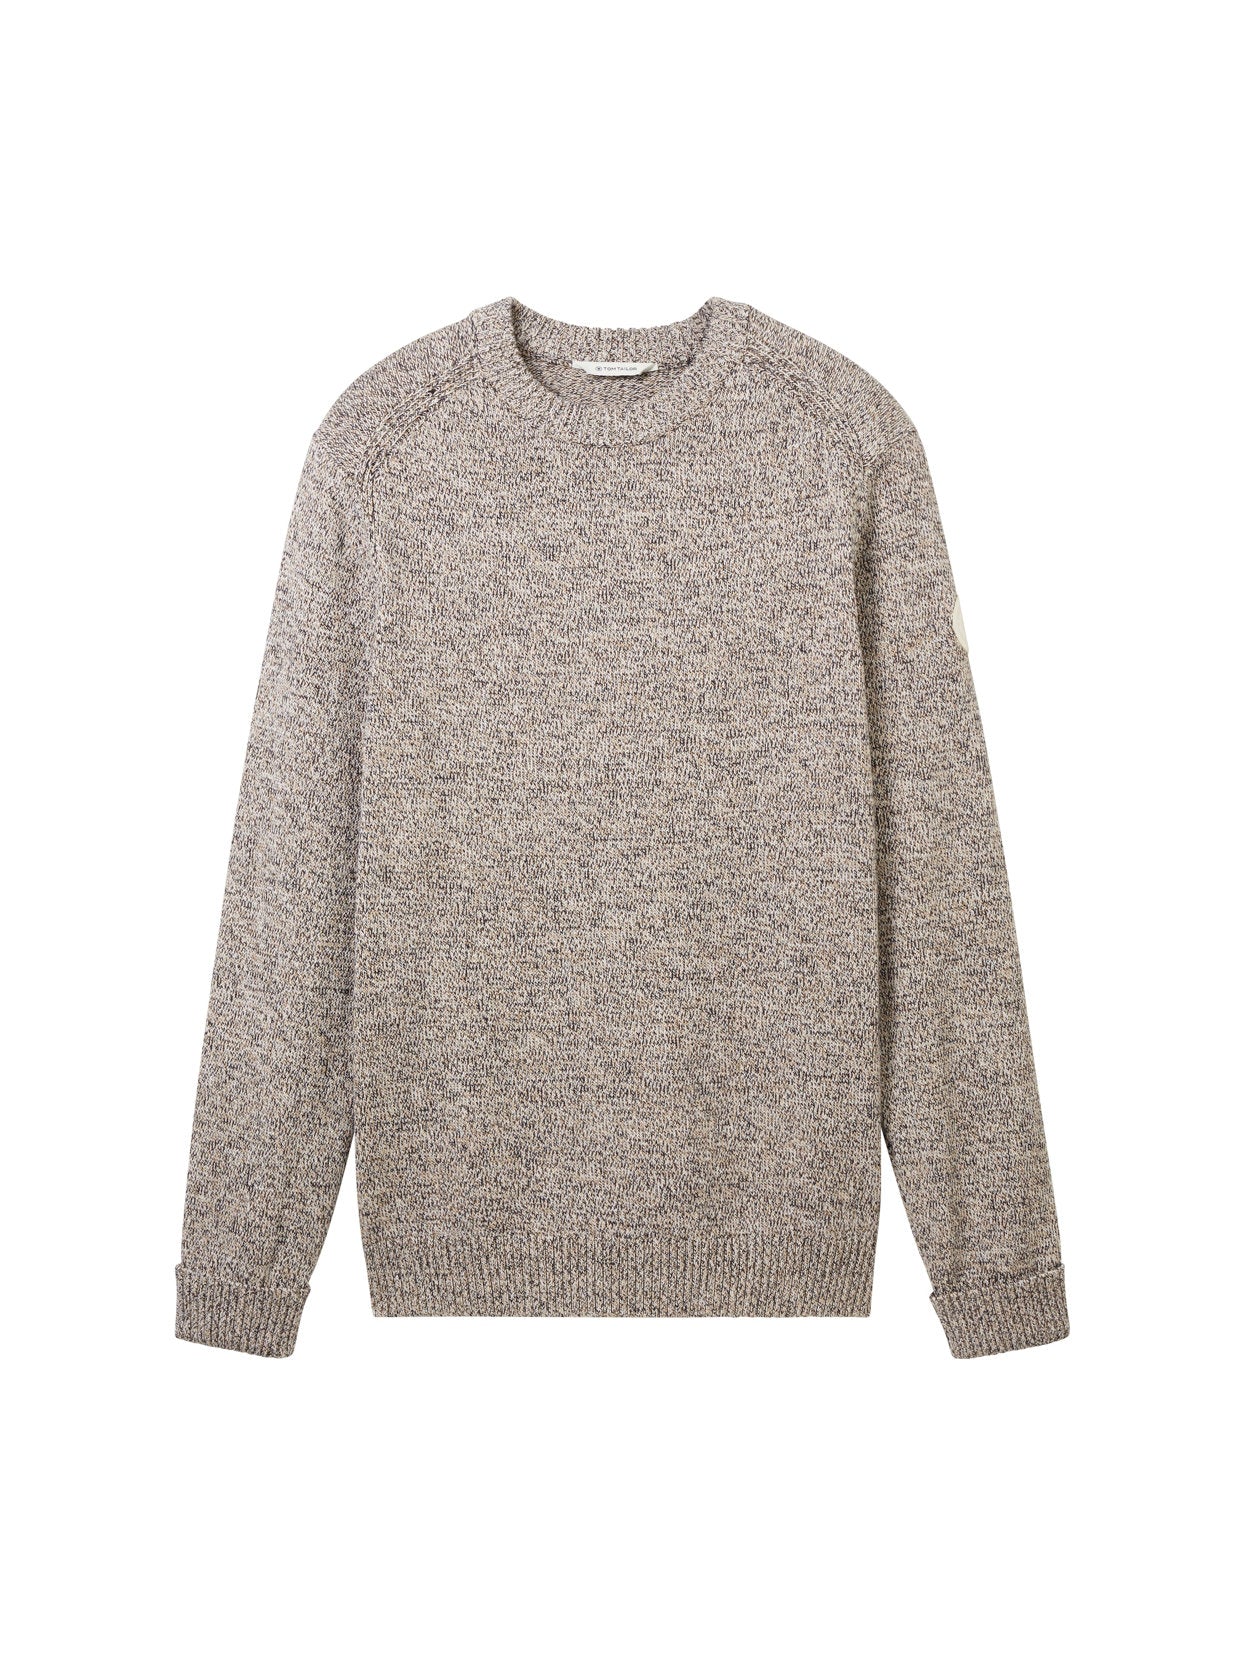 Knitted Sweater With Round Neckline_1038246_32742_01